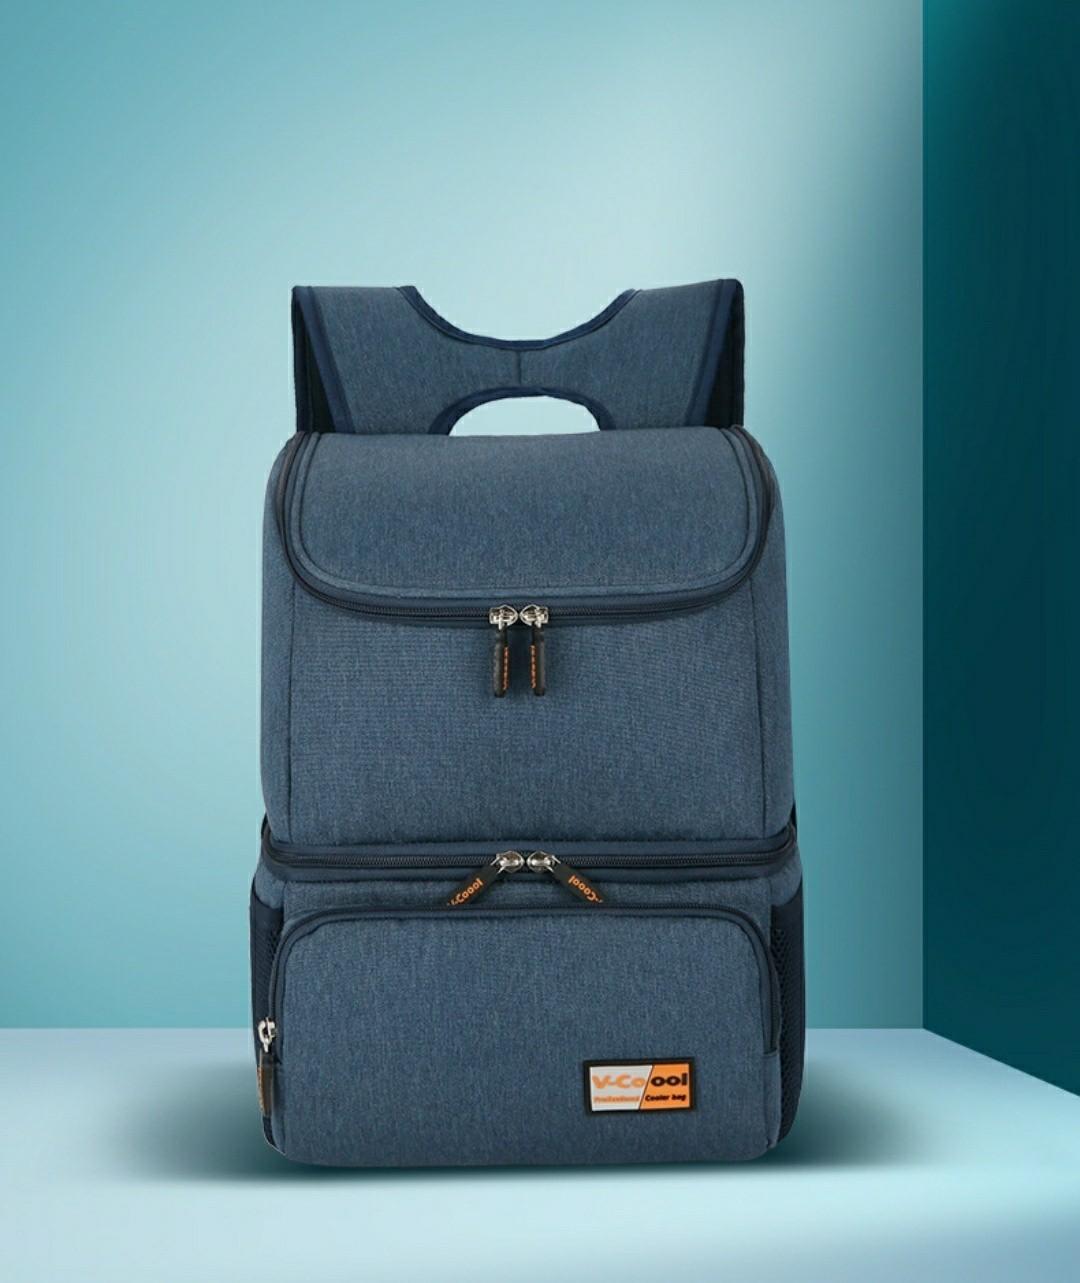 Cooler Bag กระเป๋าเก็บอุณหภูมิ กระเป๋าเก็บนมแม่ V-Cool รุ่น Super Big แถมฟรี เจลไอซ์ 5 ชิ้น + กระเป๋ากันซึม 1 ใบ